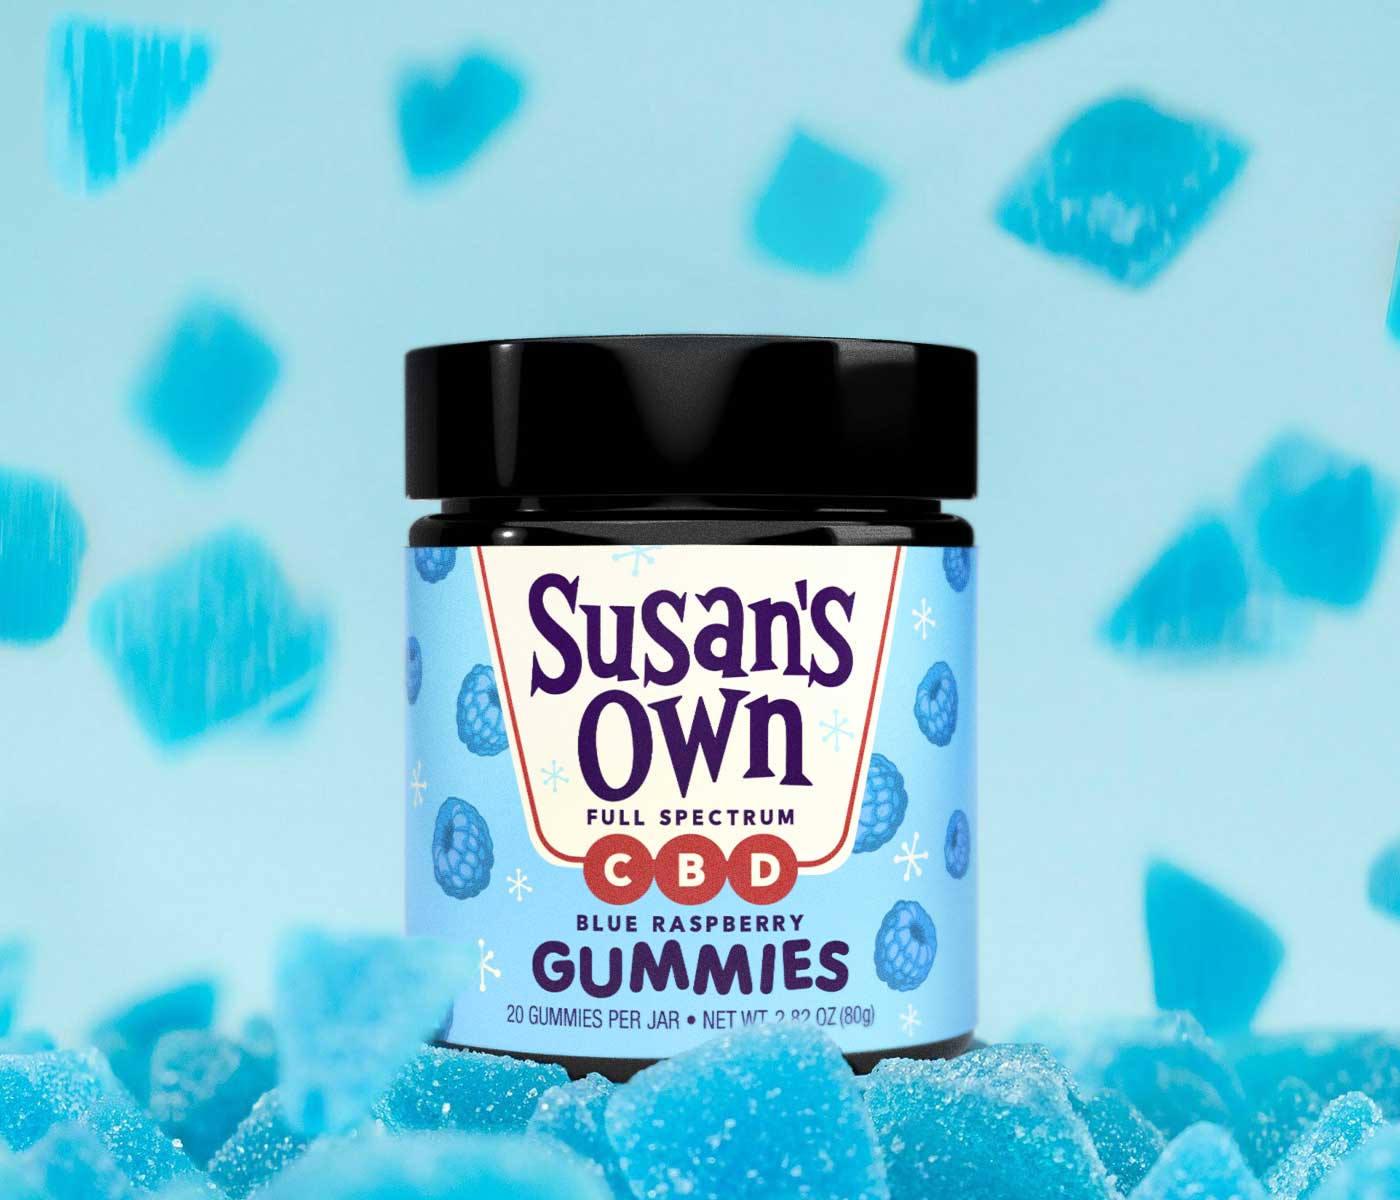 Susan's Own CBD Gummies Packaging  - Design by SixAbove Studios